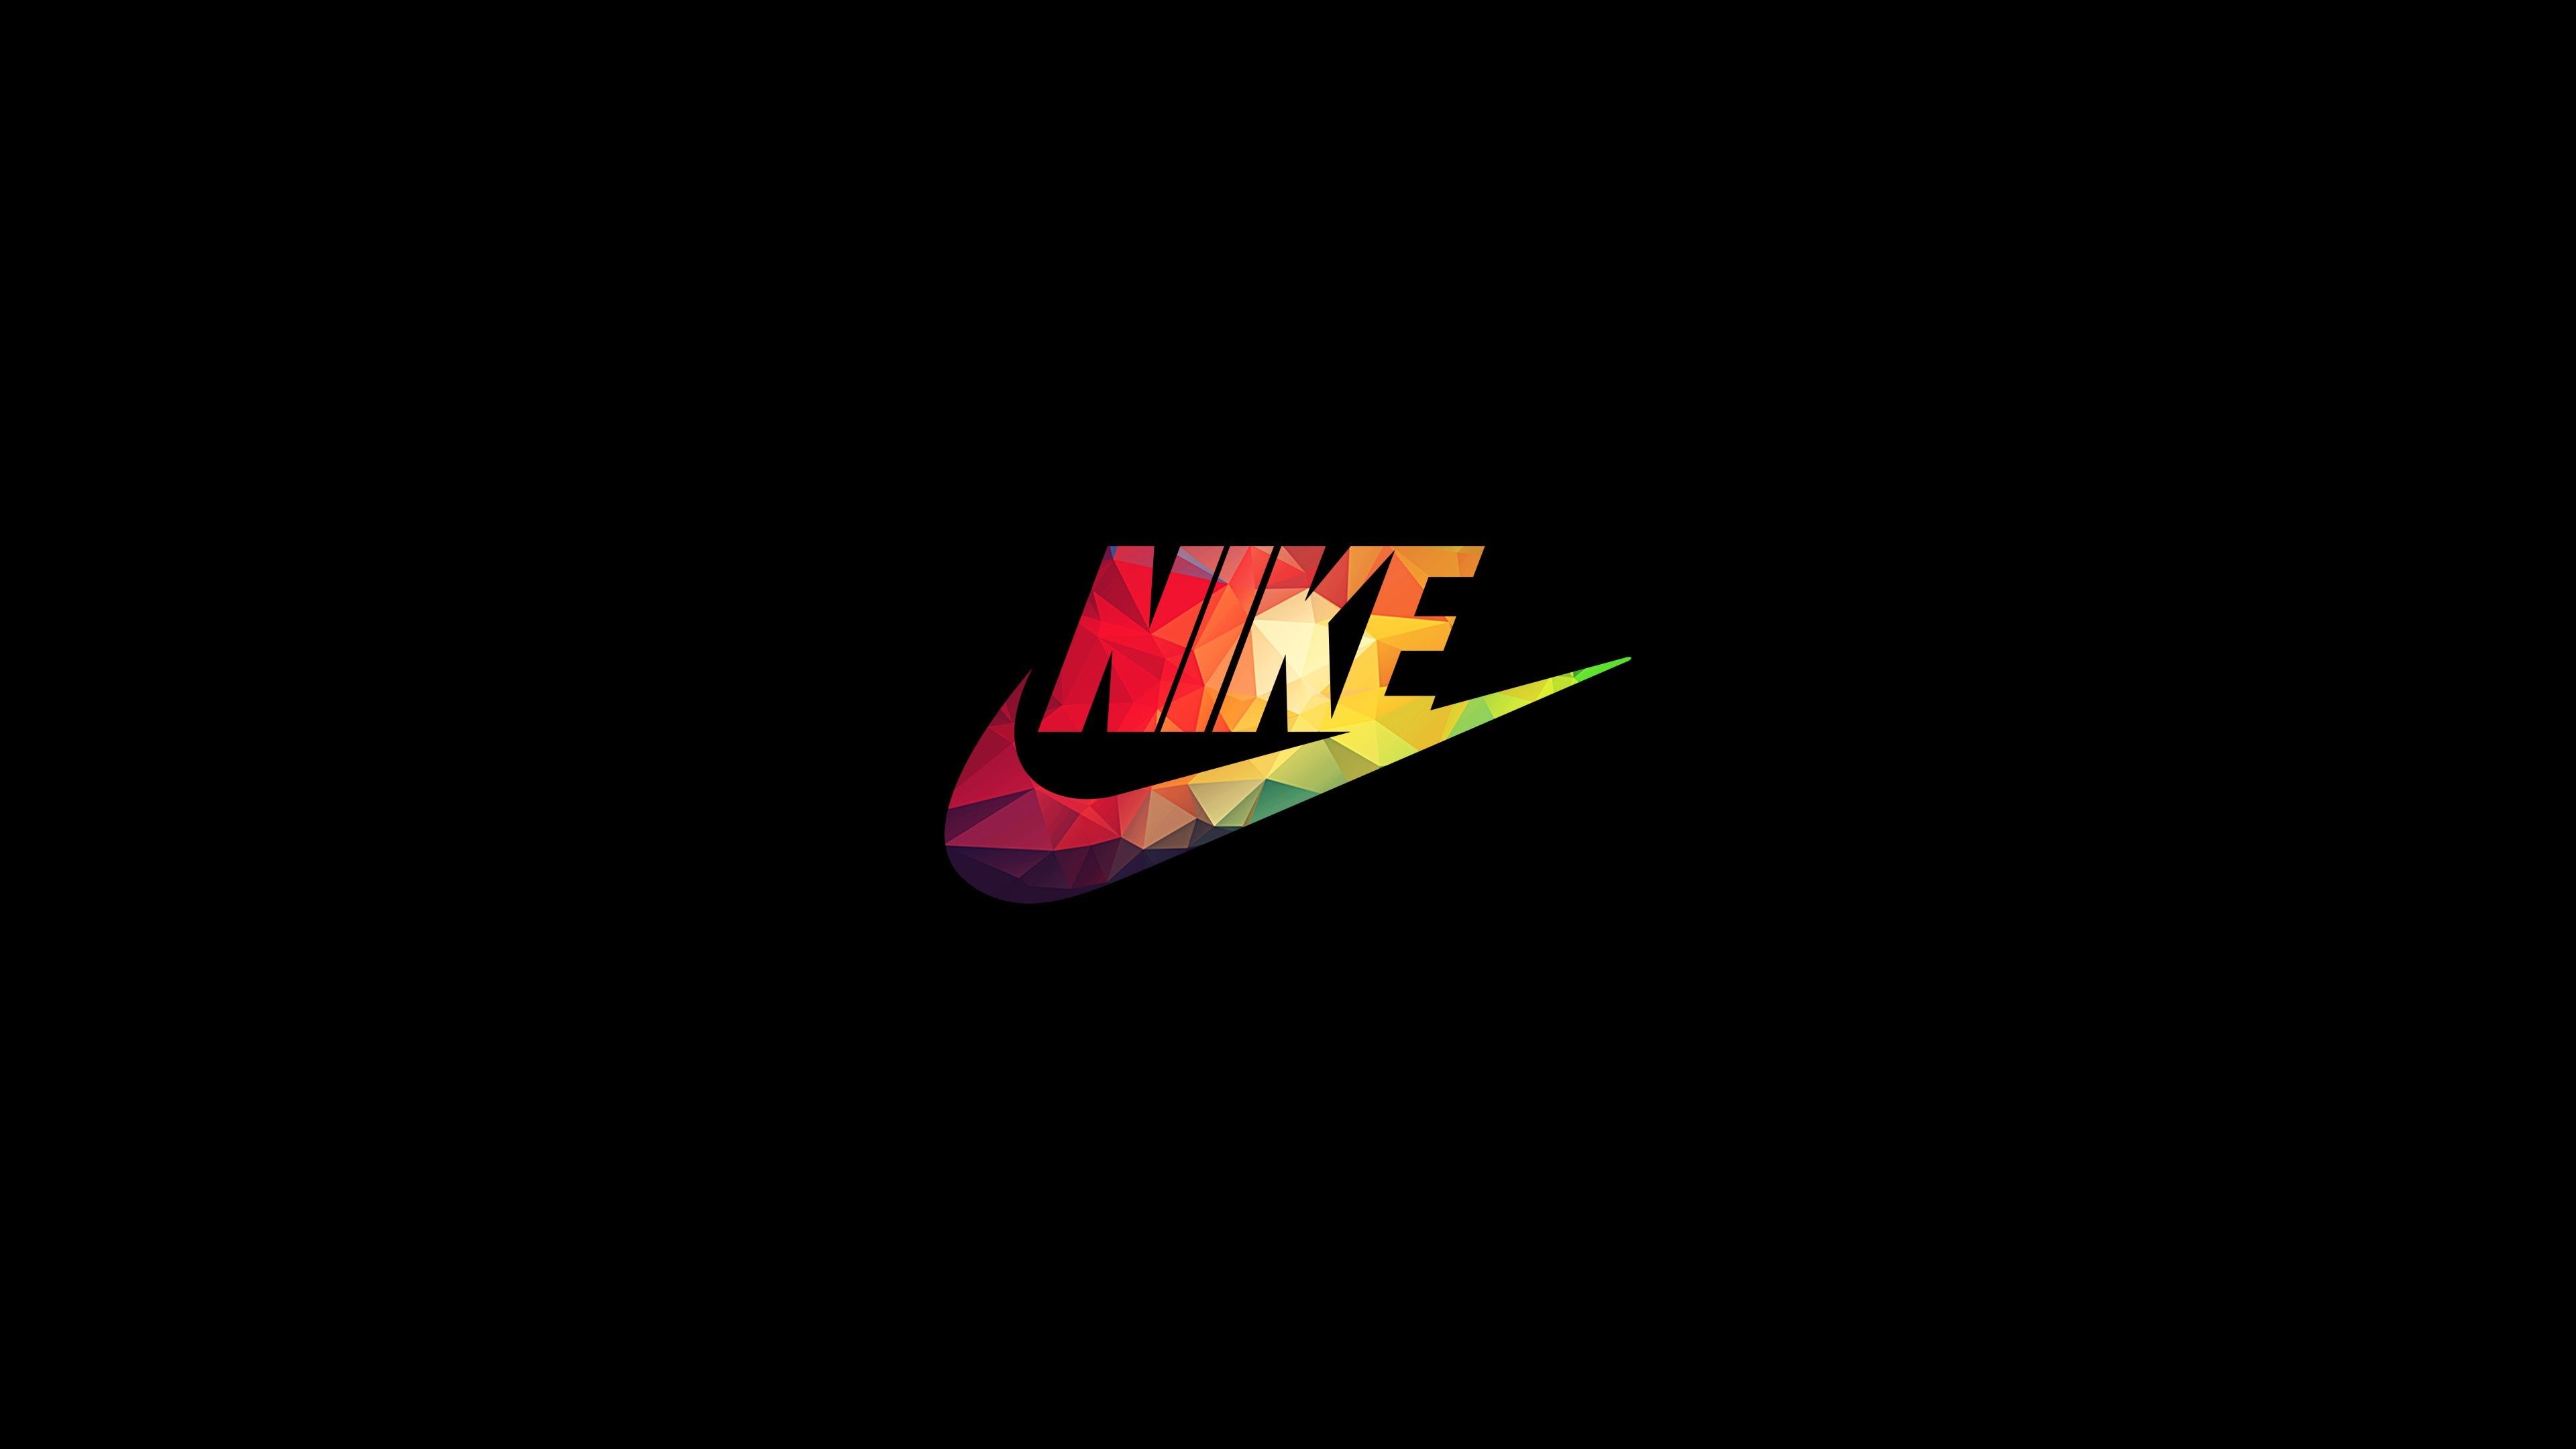 Nike wallpapers hd free download